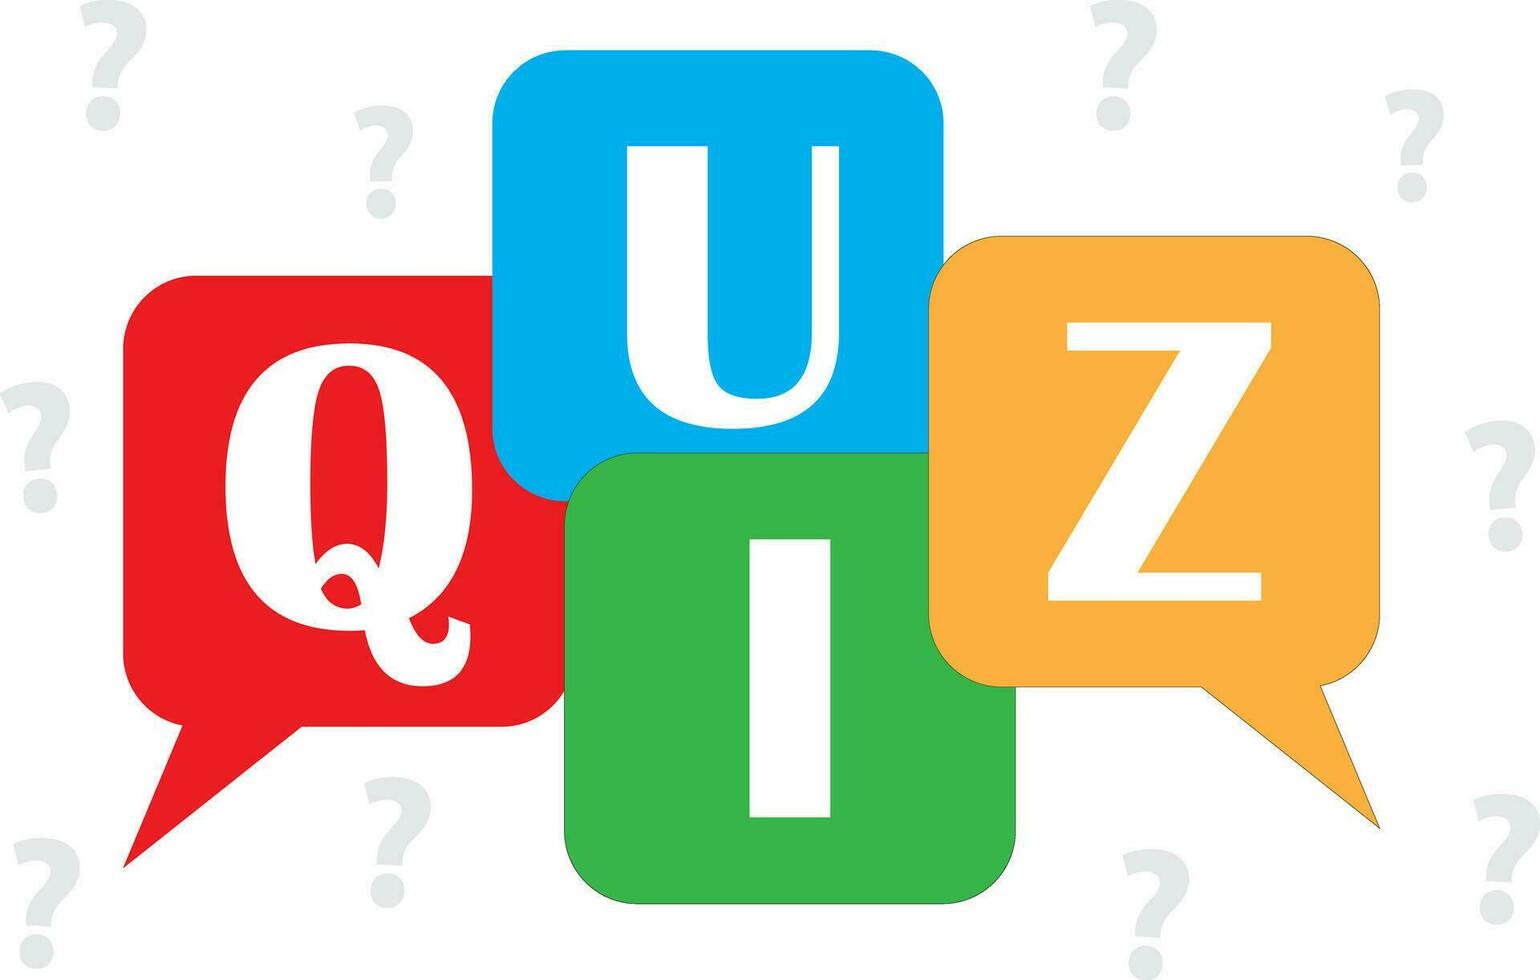 Quiz logo with speech bubble symbols, concept of questionnaire show sing, quiz button, question competition. Vector stock illustration.